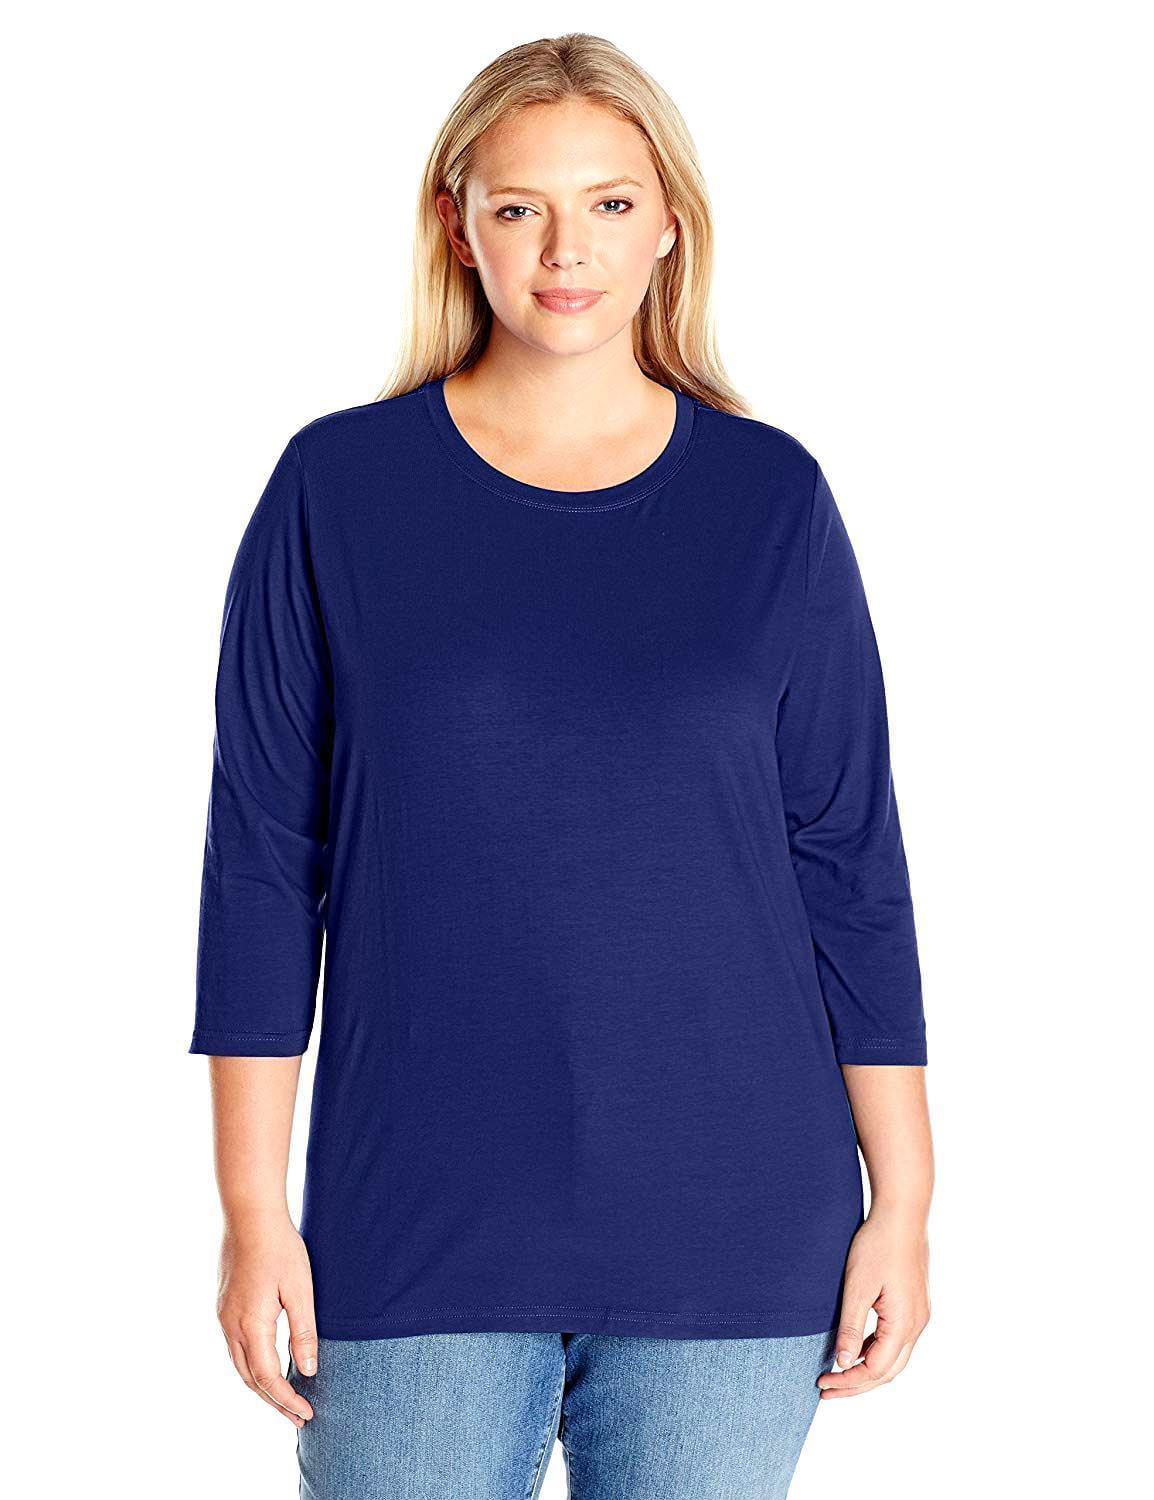 FORUU Plus Size Women Solid Half Sleeve V Neck Casual Ladies OL Work T Shirt 